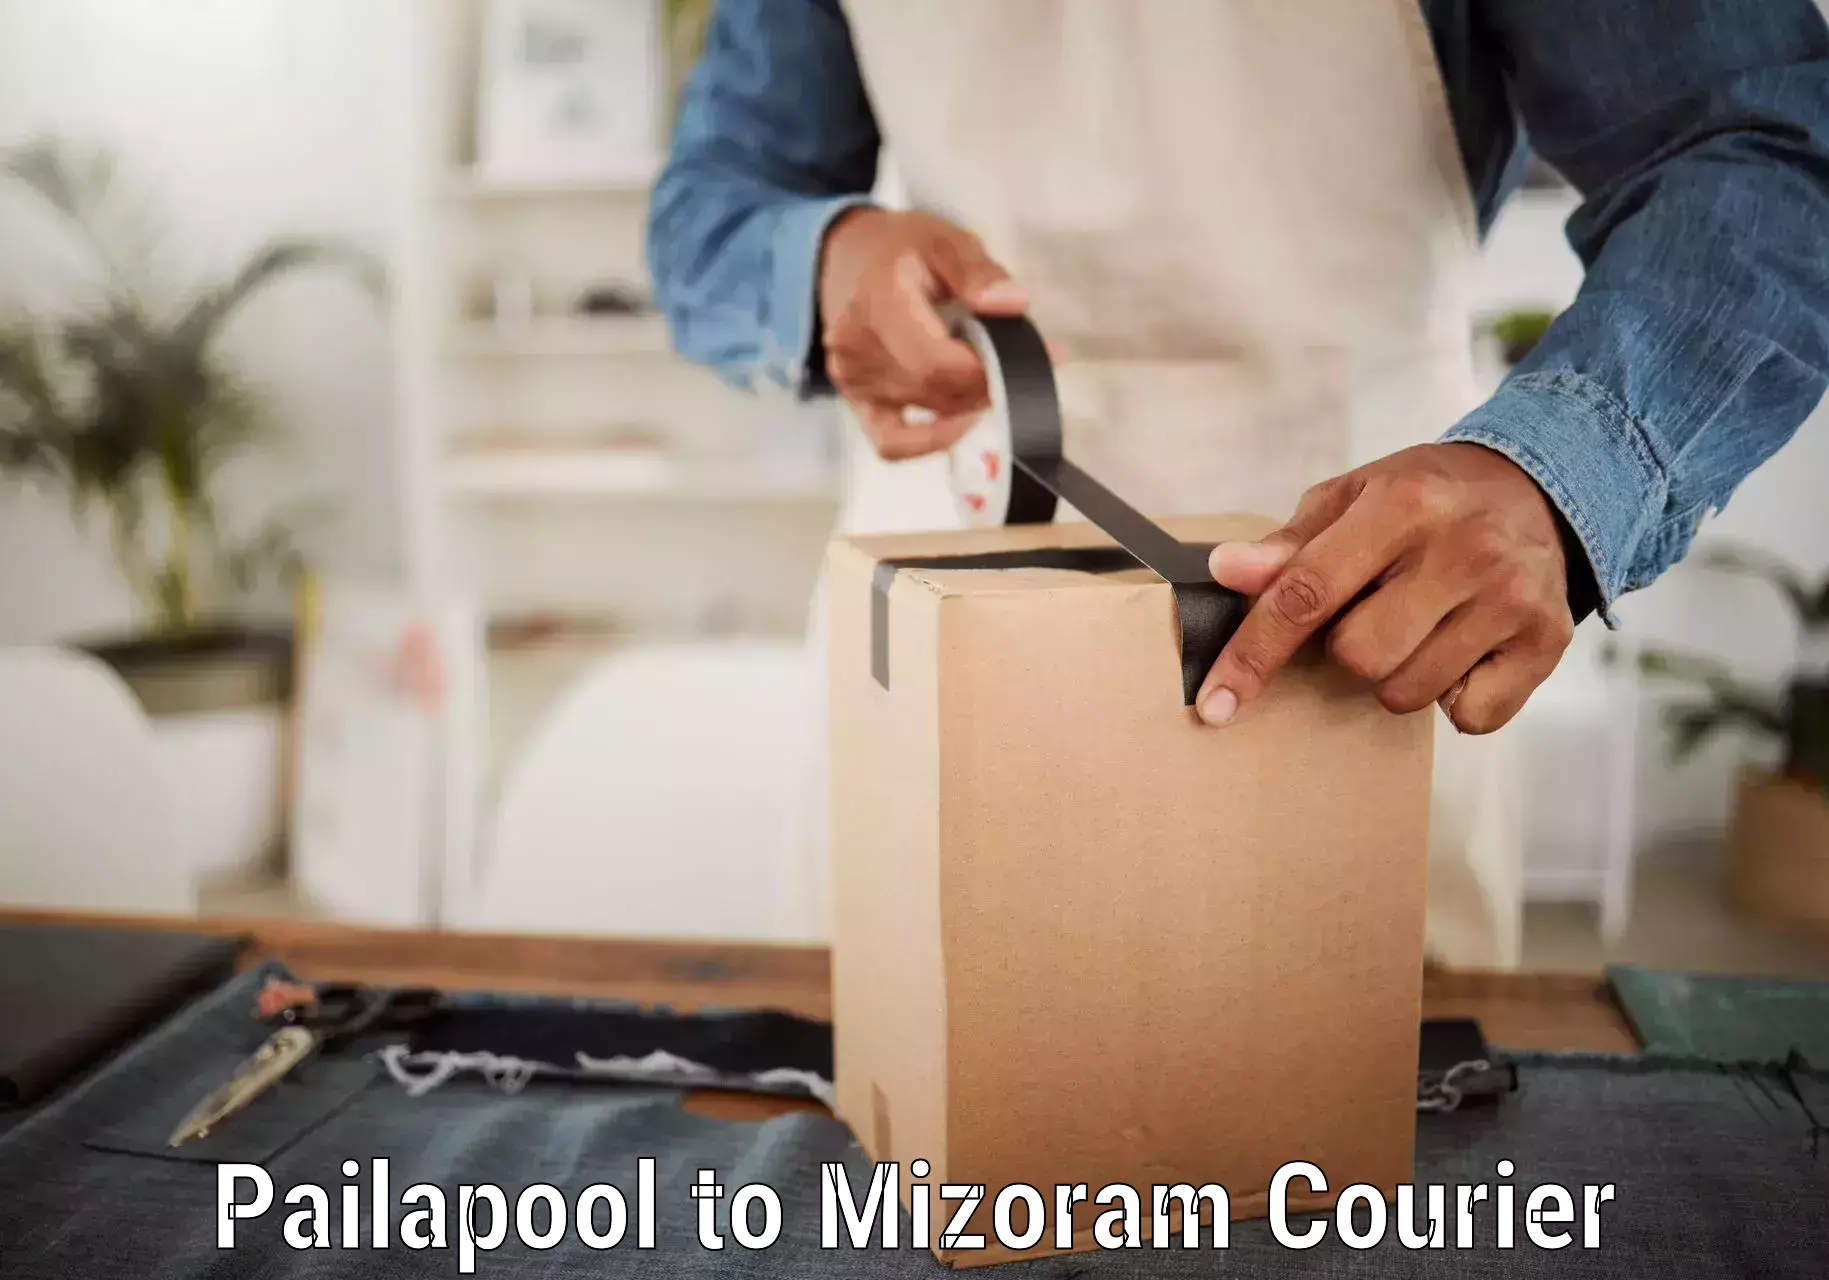 Courier service comparison in Pailapool to Aizawl